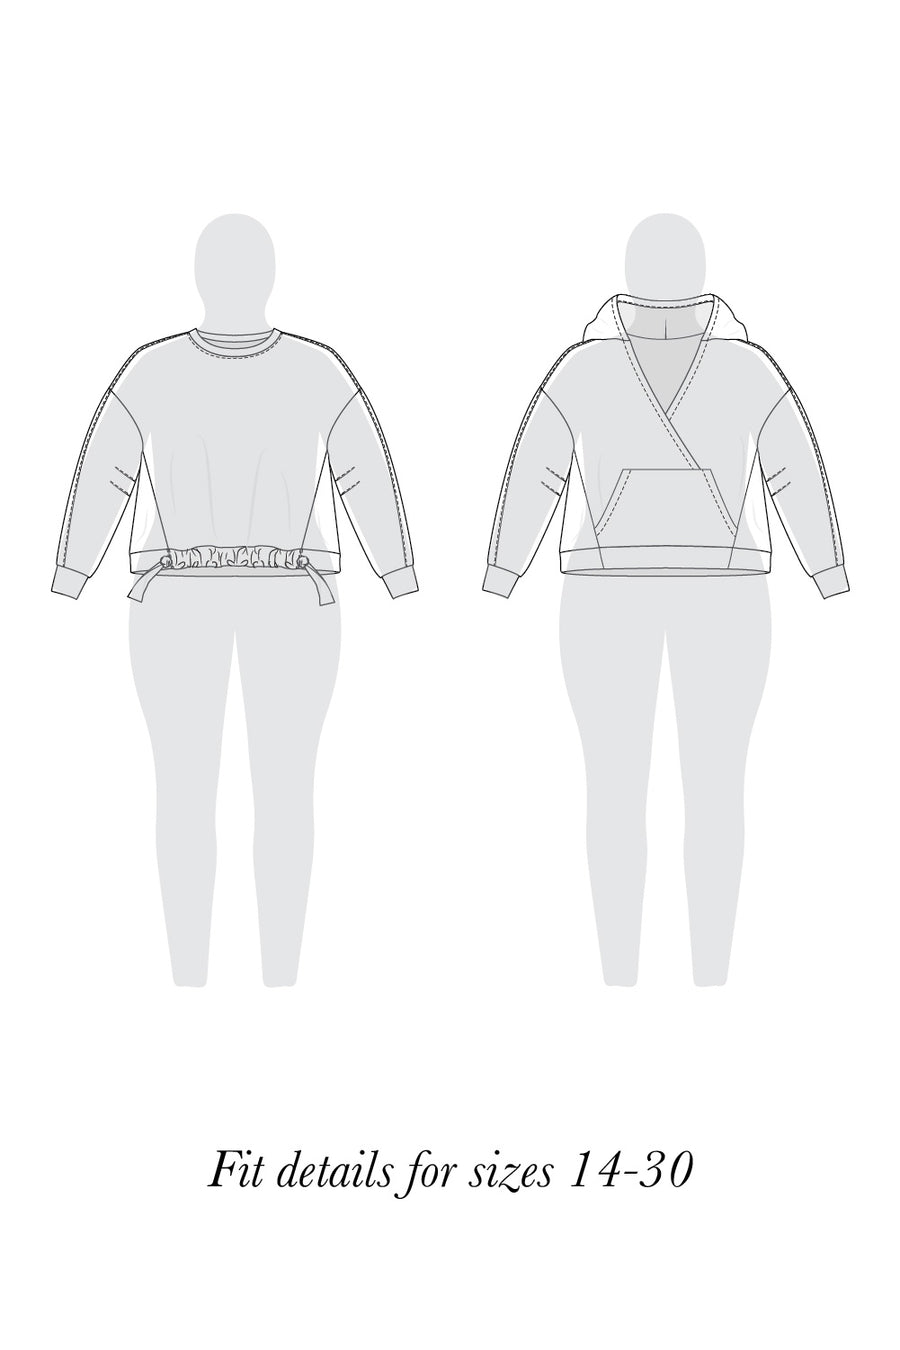 Mile End Sweatshirt Pattern | Tech flats | by Closet Core Patterns